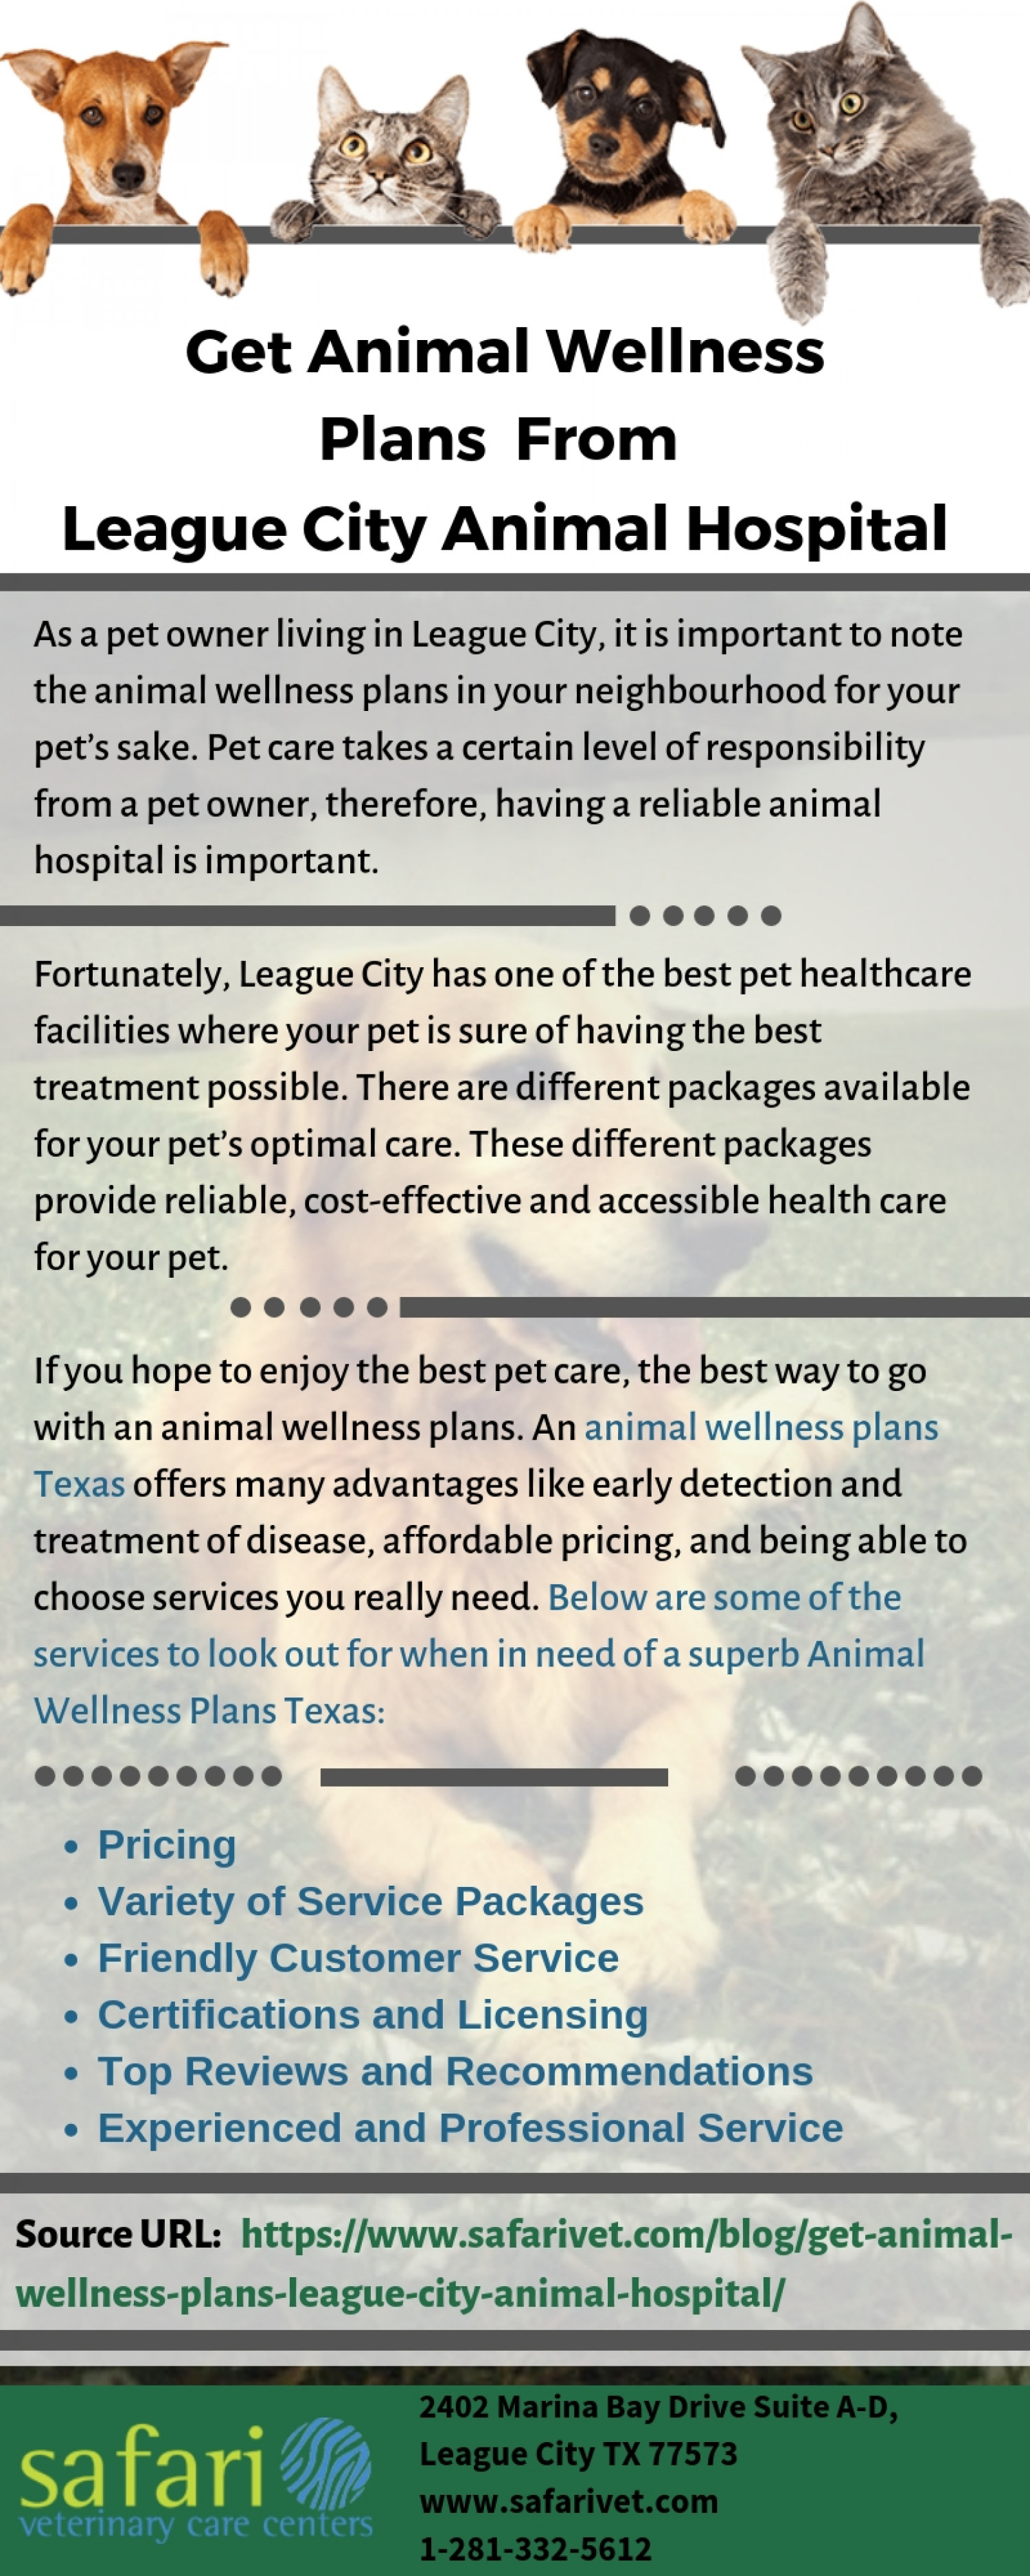 Get Animal Wellness Plans from League City Animal Hospital - SafariVet Infographic